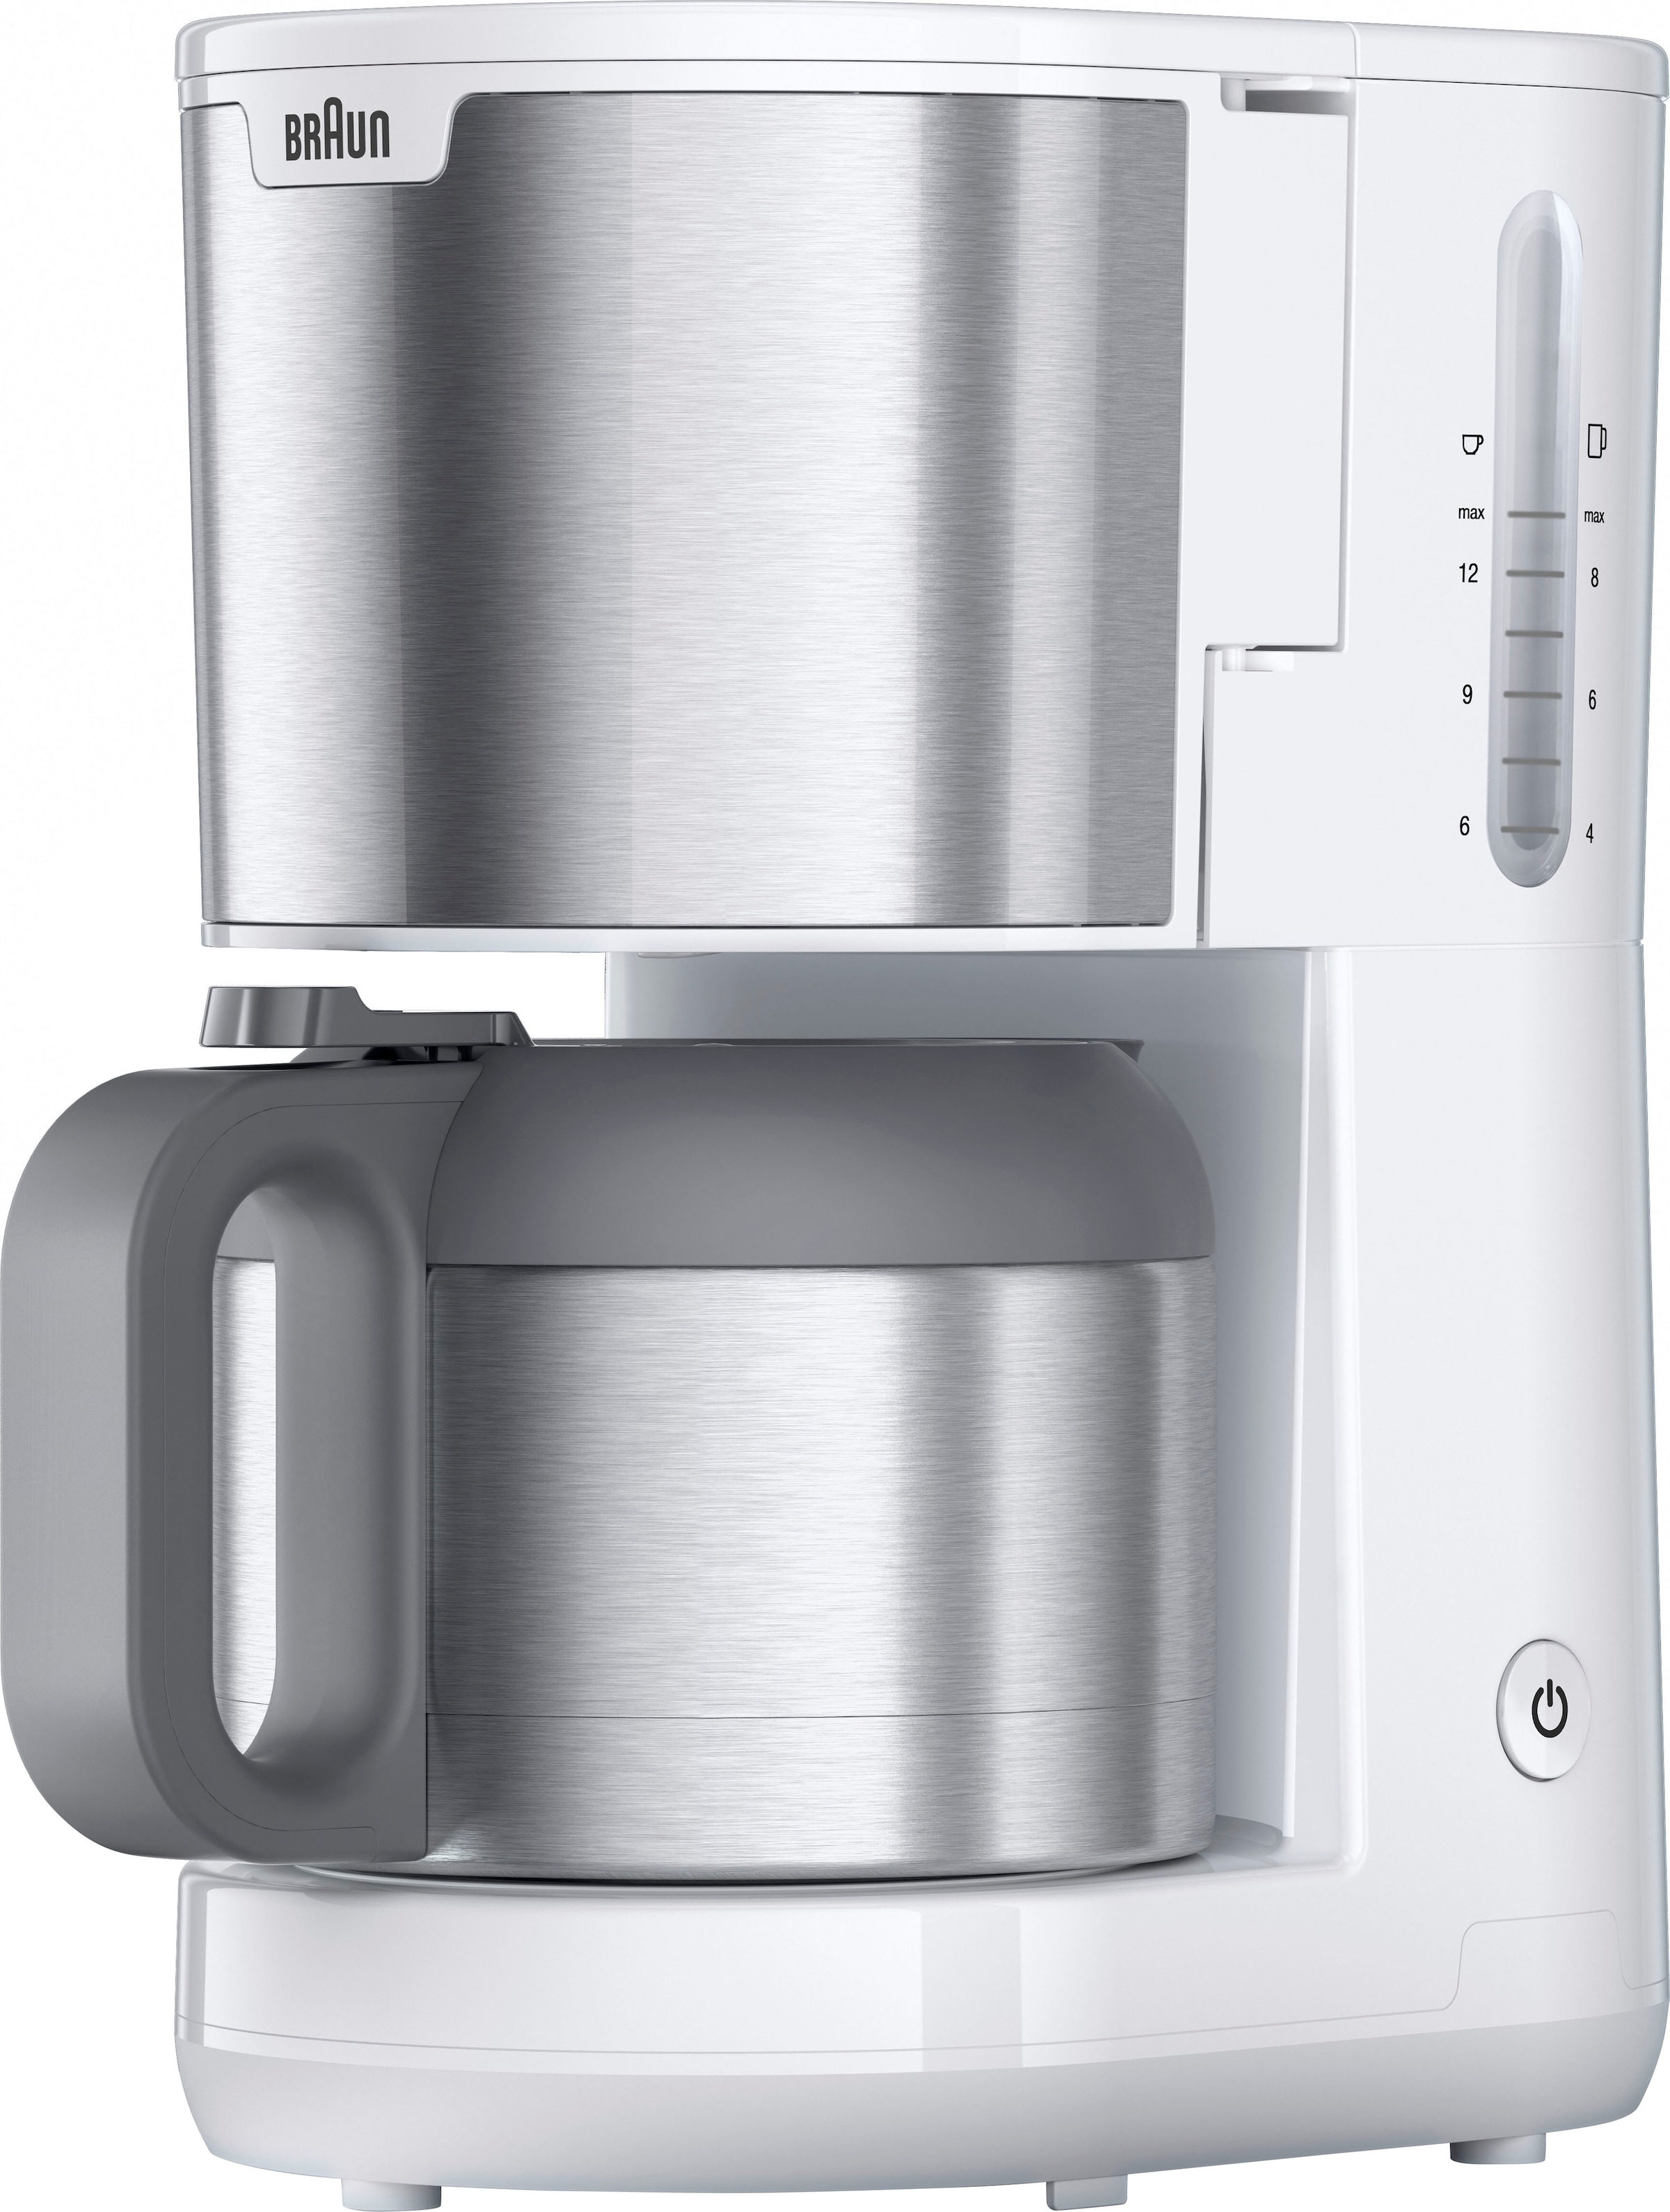 Braun Filterkaffeemaschine »PurShine KF1505 WH mit Thermokanne«, 1,2 l Kaffeekanne, Papierfilter